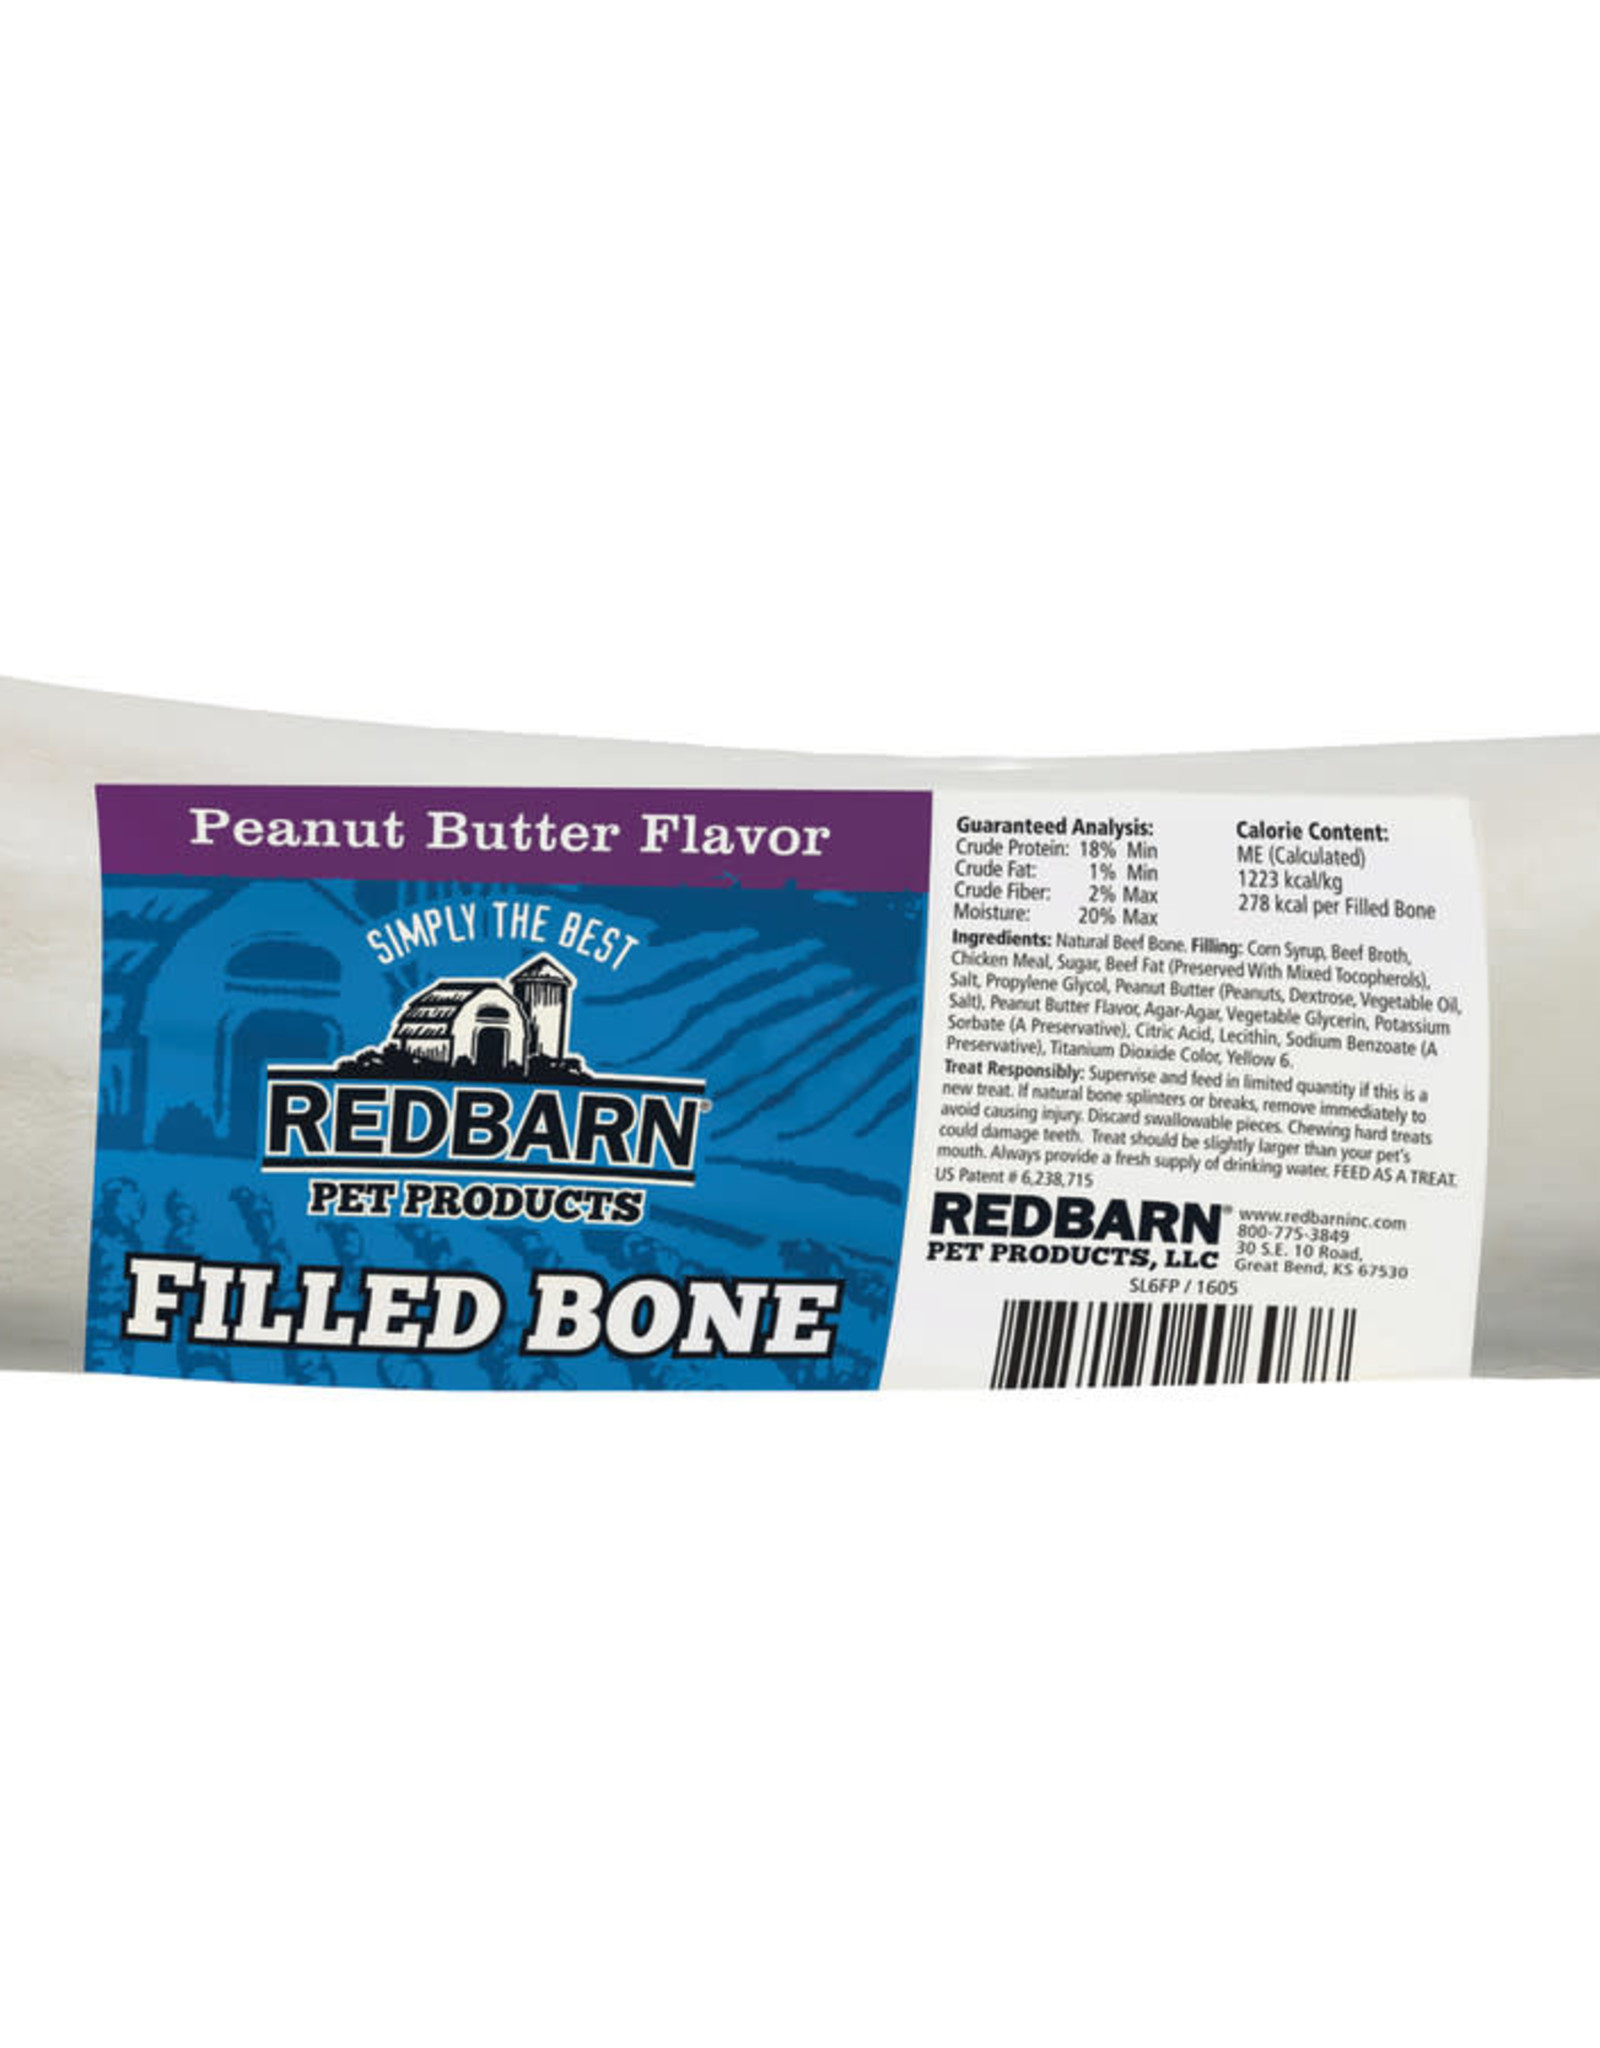 REDBARN PET PRODUCTS Redbarn Filled Bone Peanut Butter Large